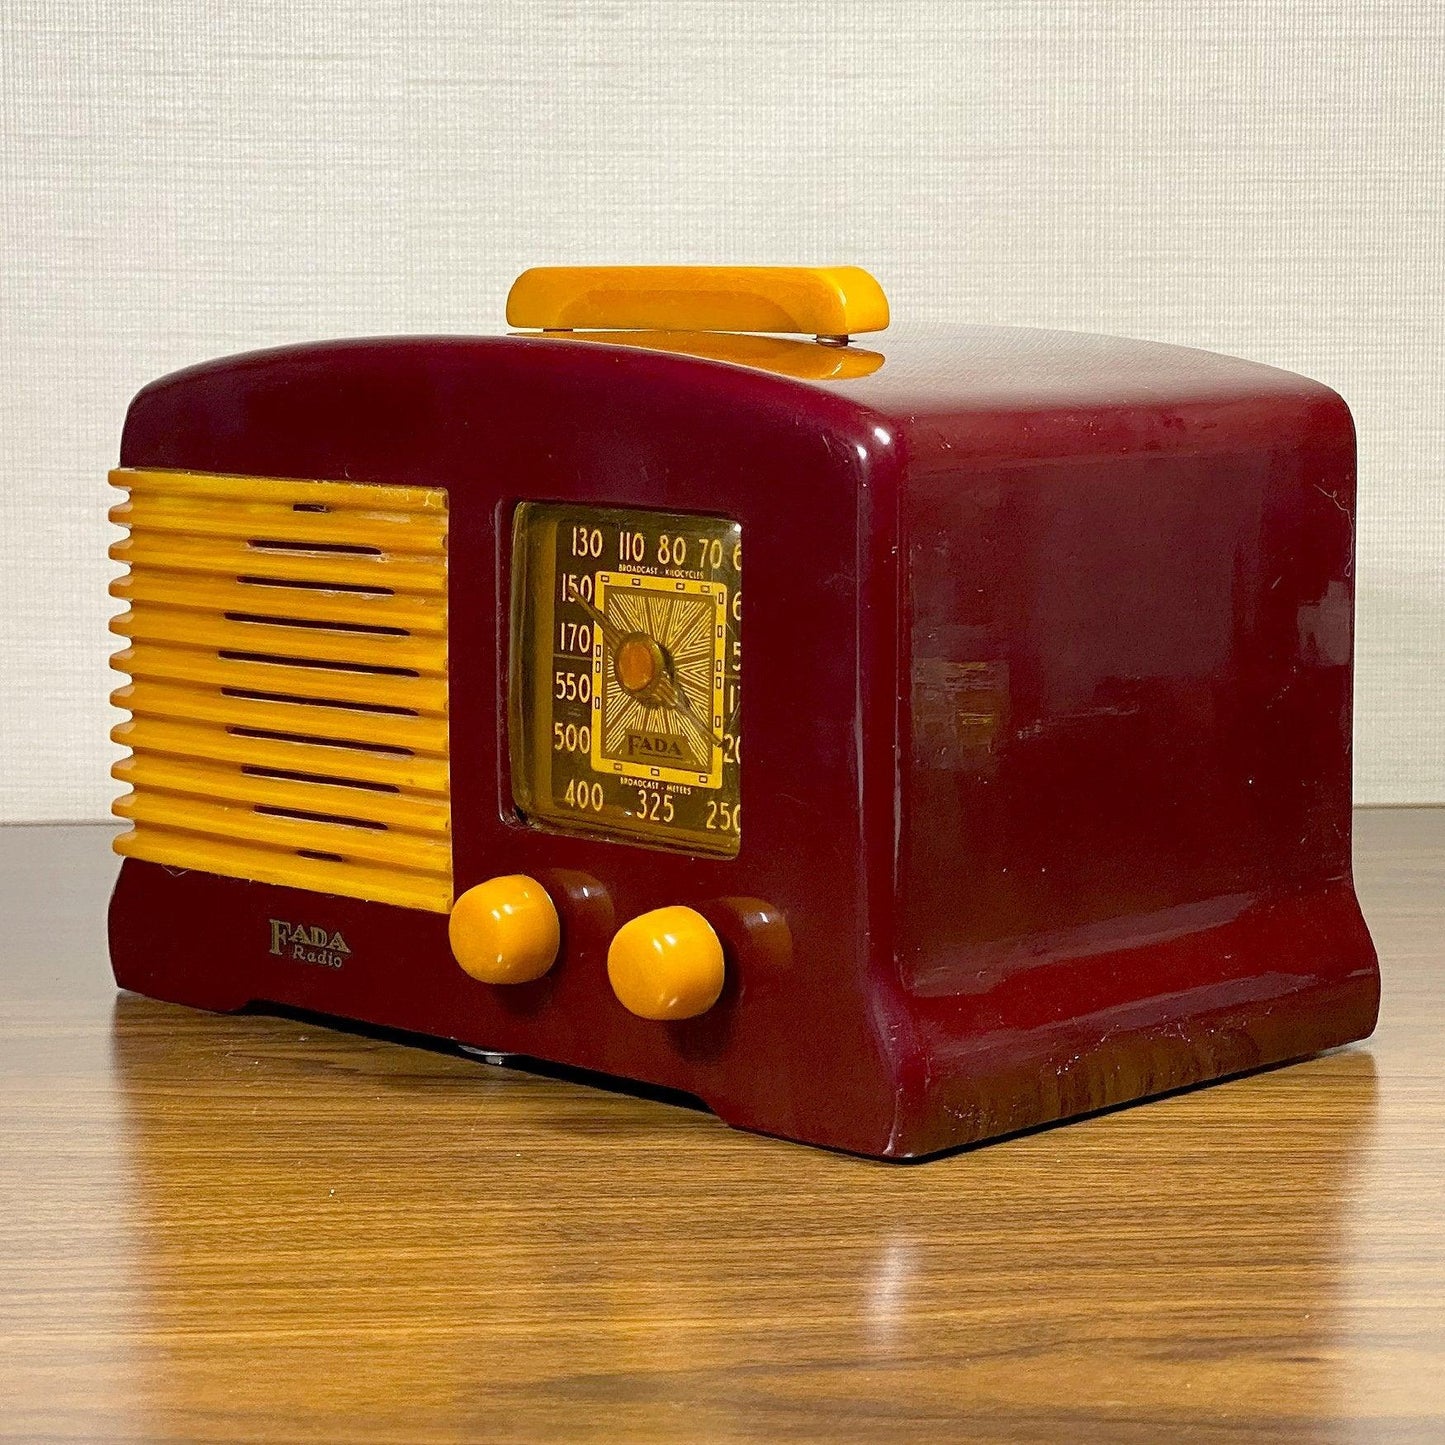 FADA 202 Catalin Radio, Maroon and Butterscotch